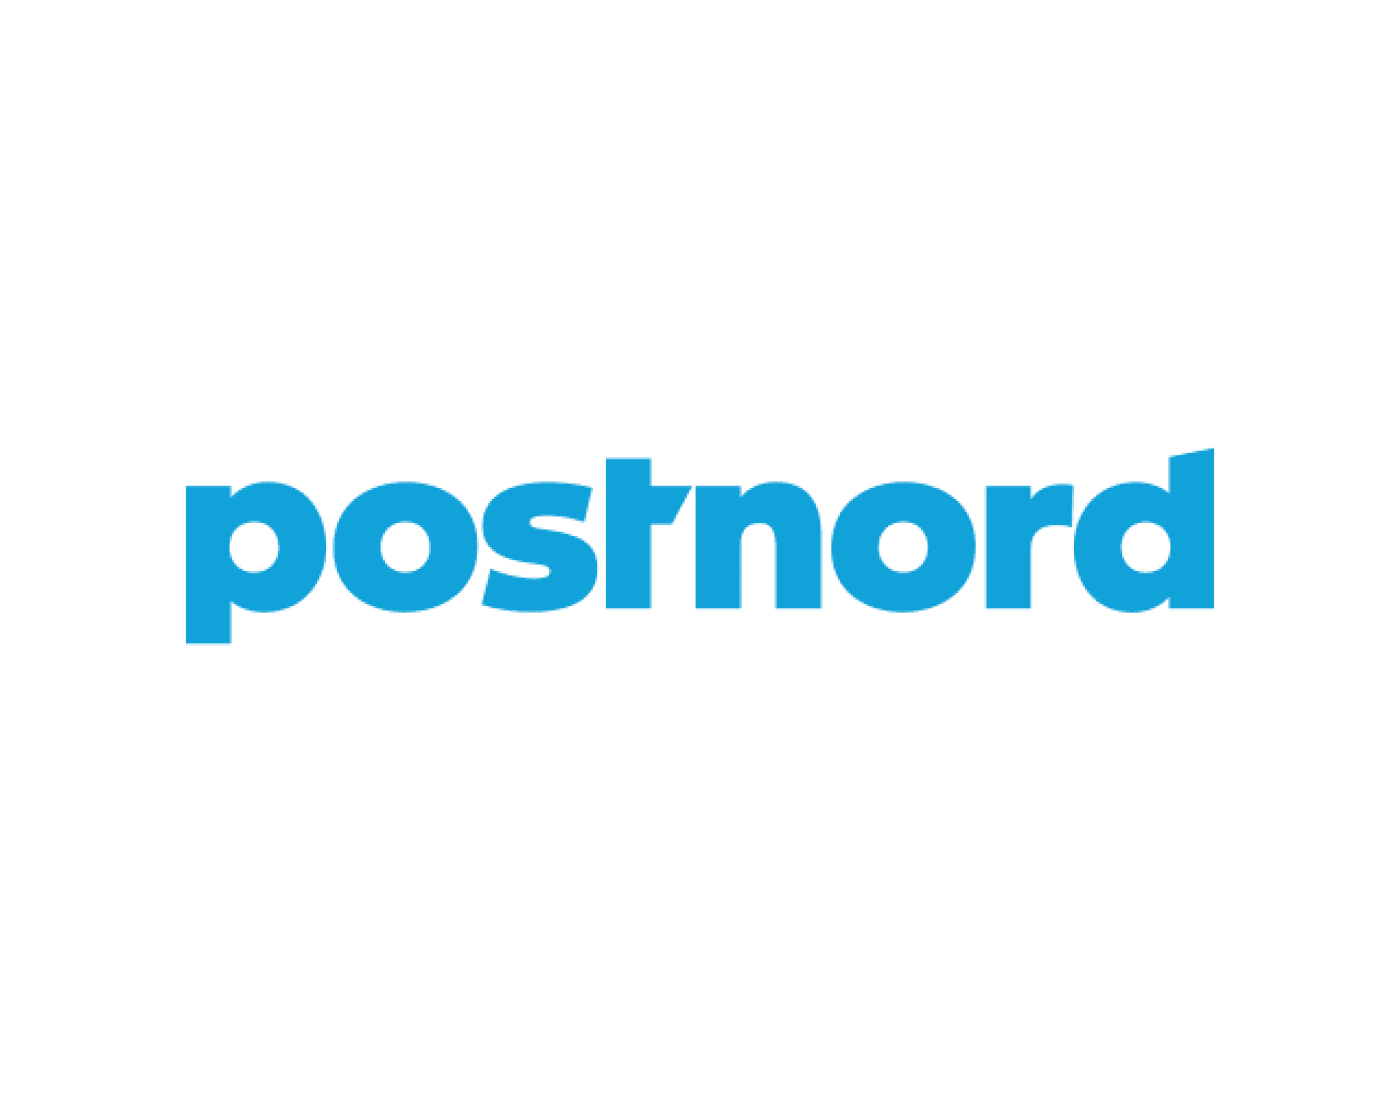 postnord-logo-2021-640x500-01.png